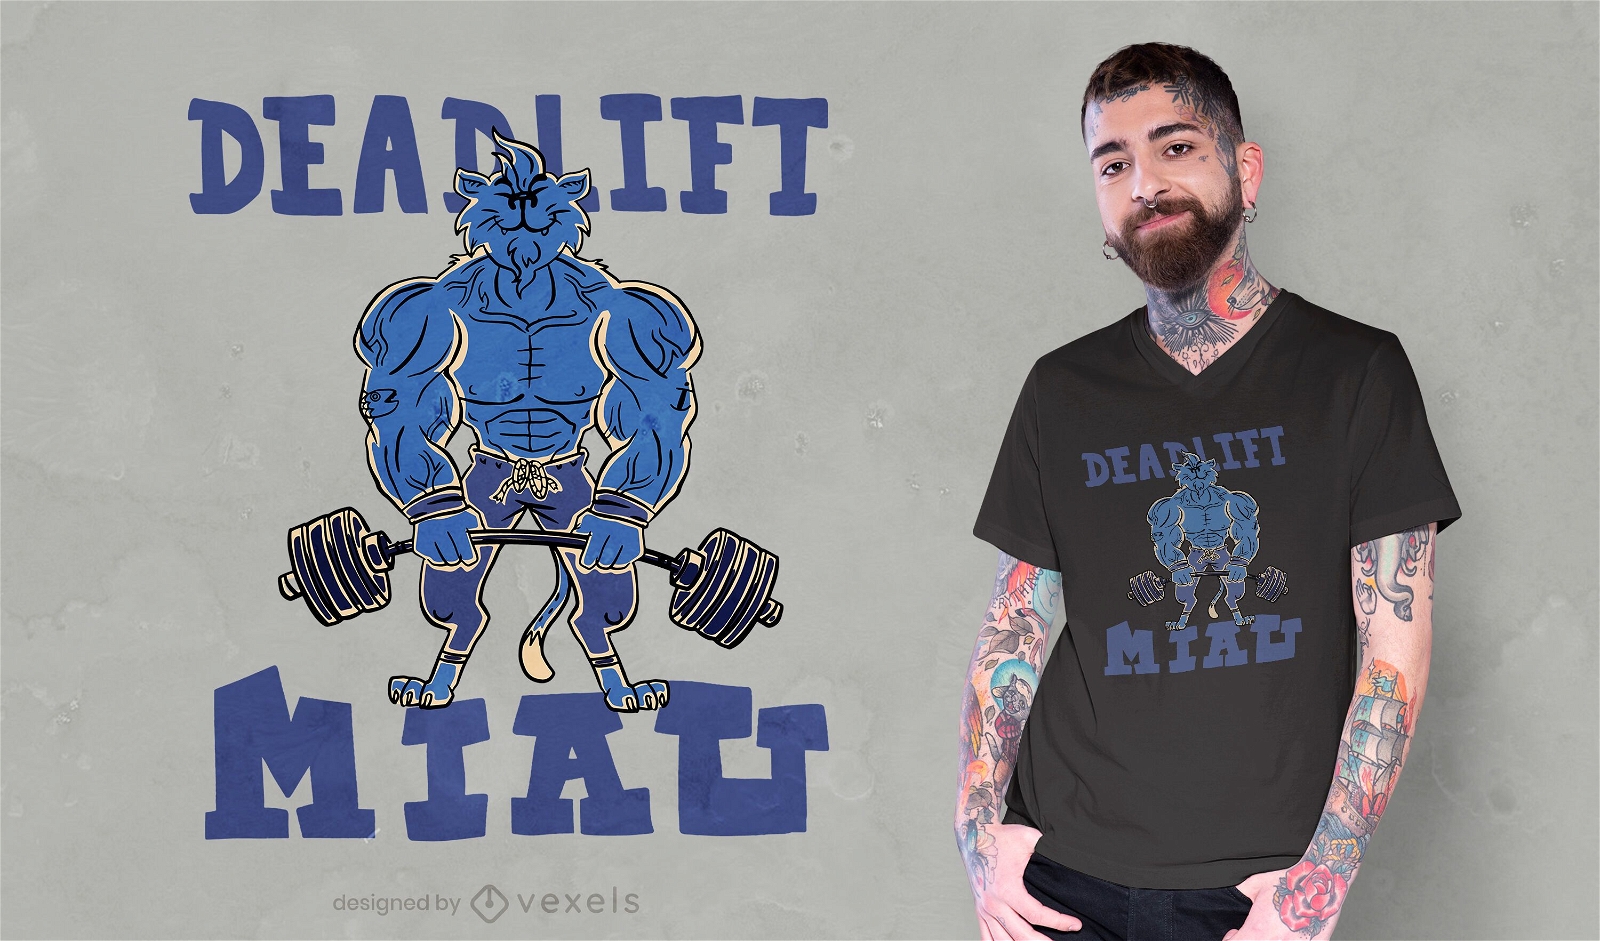 Weightlifting cat t-shirt design